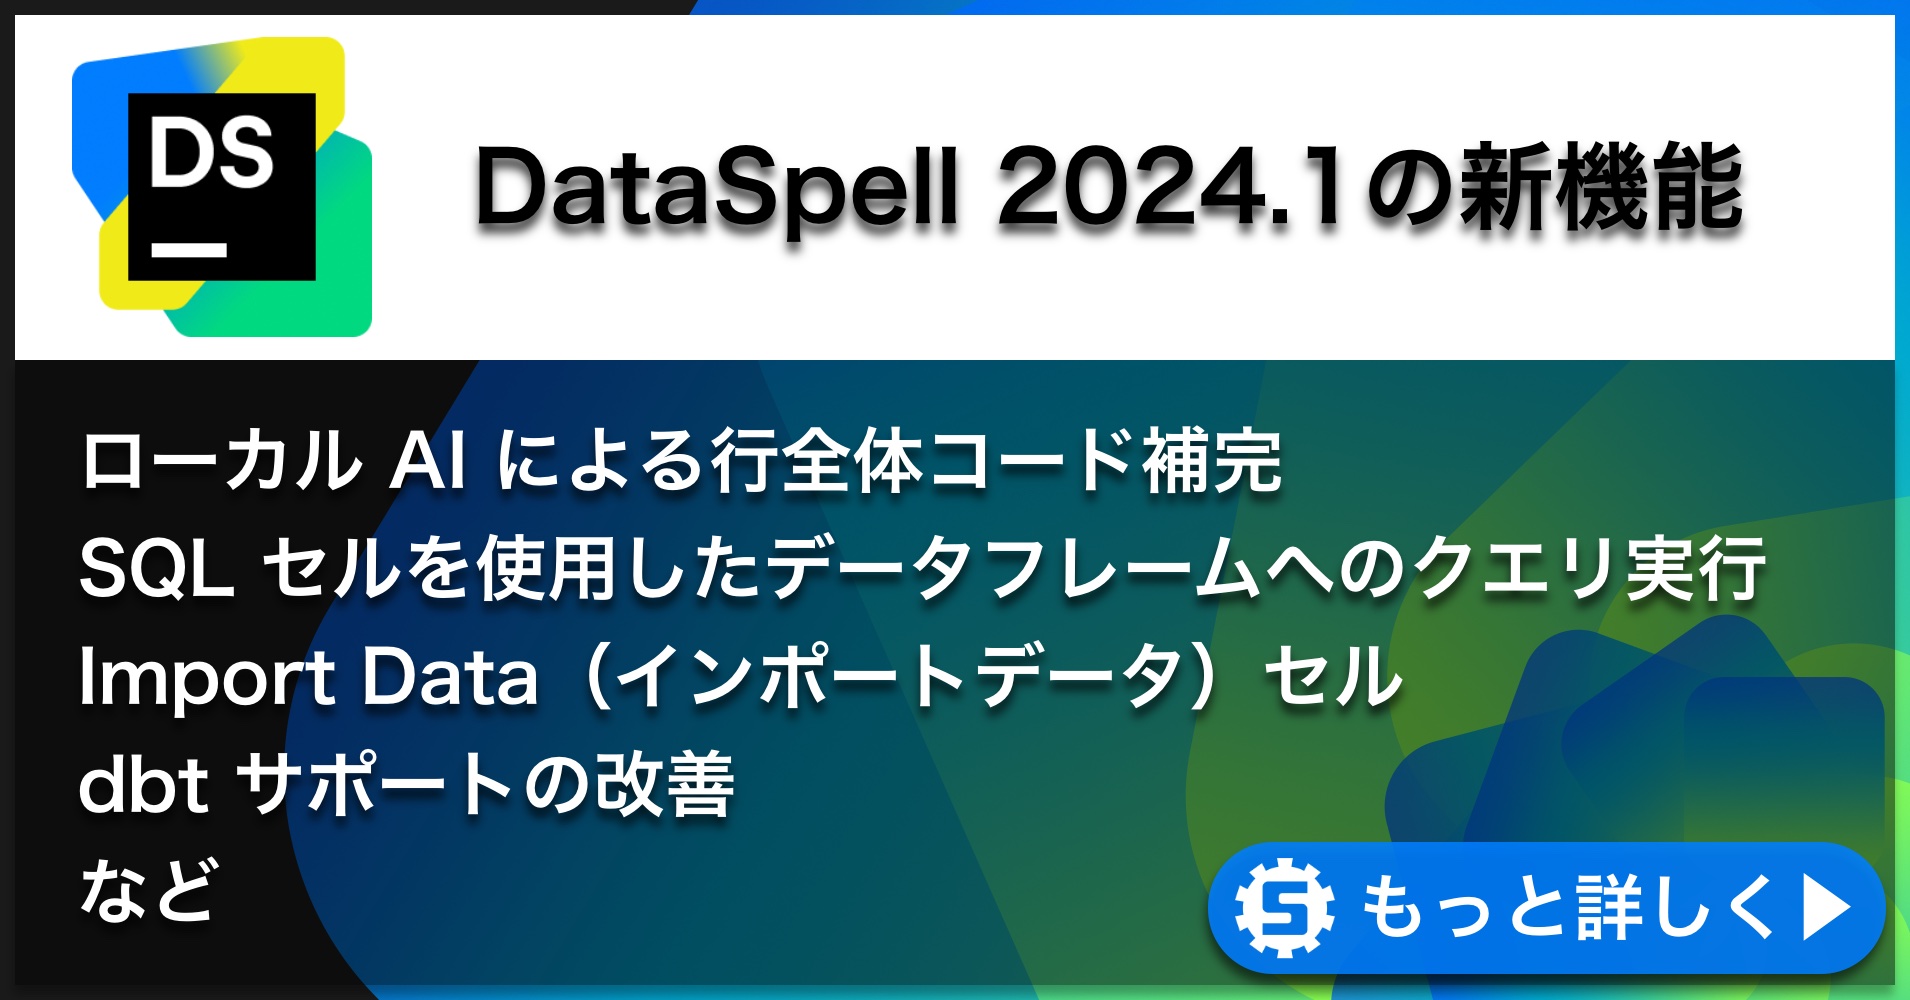 DataSpell 2024.1の新機能